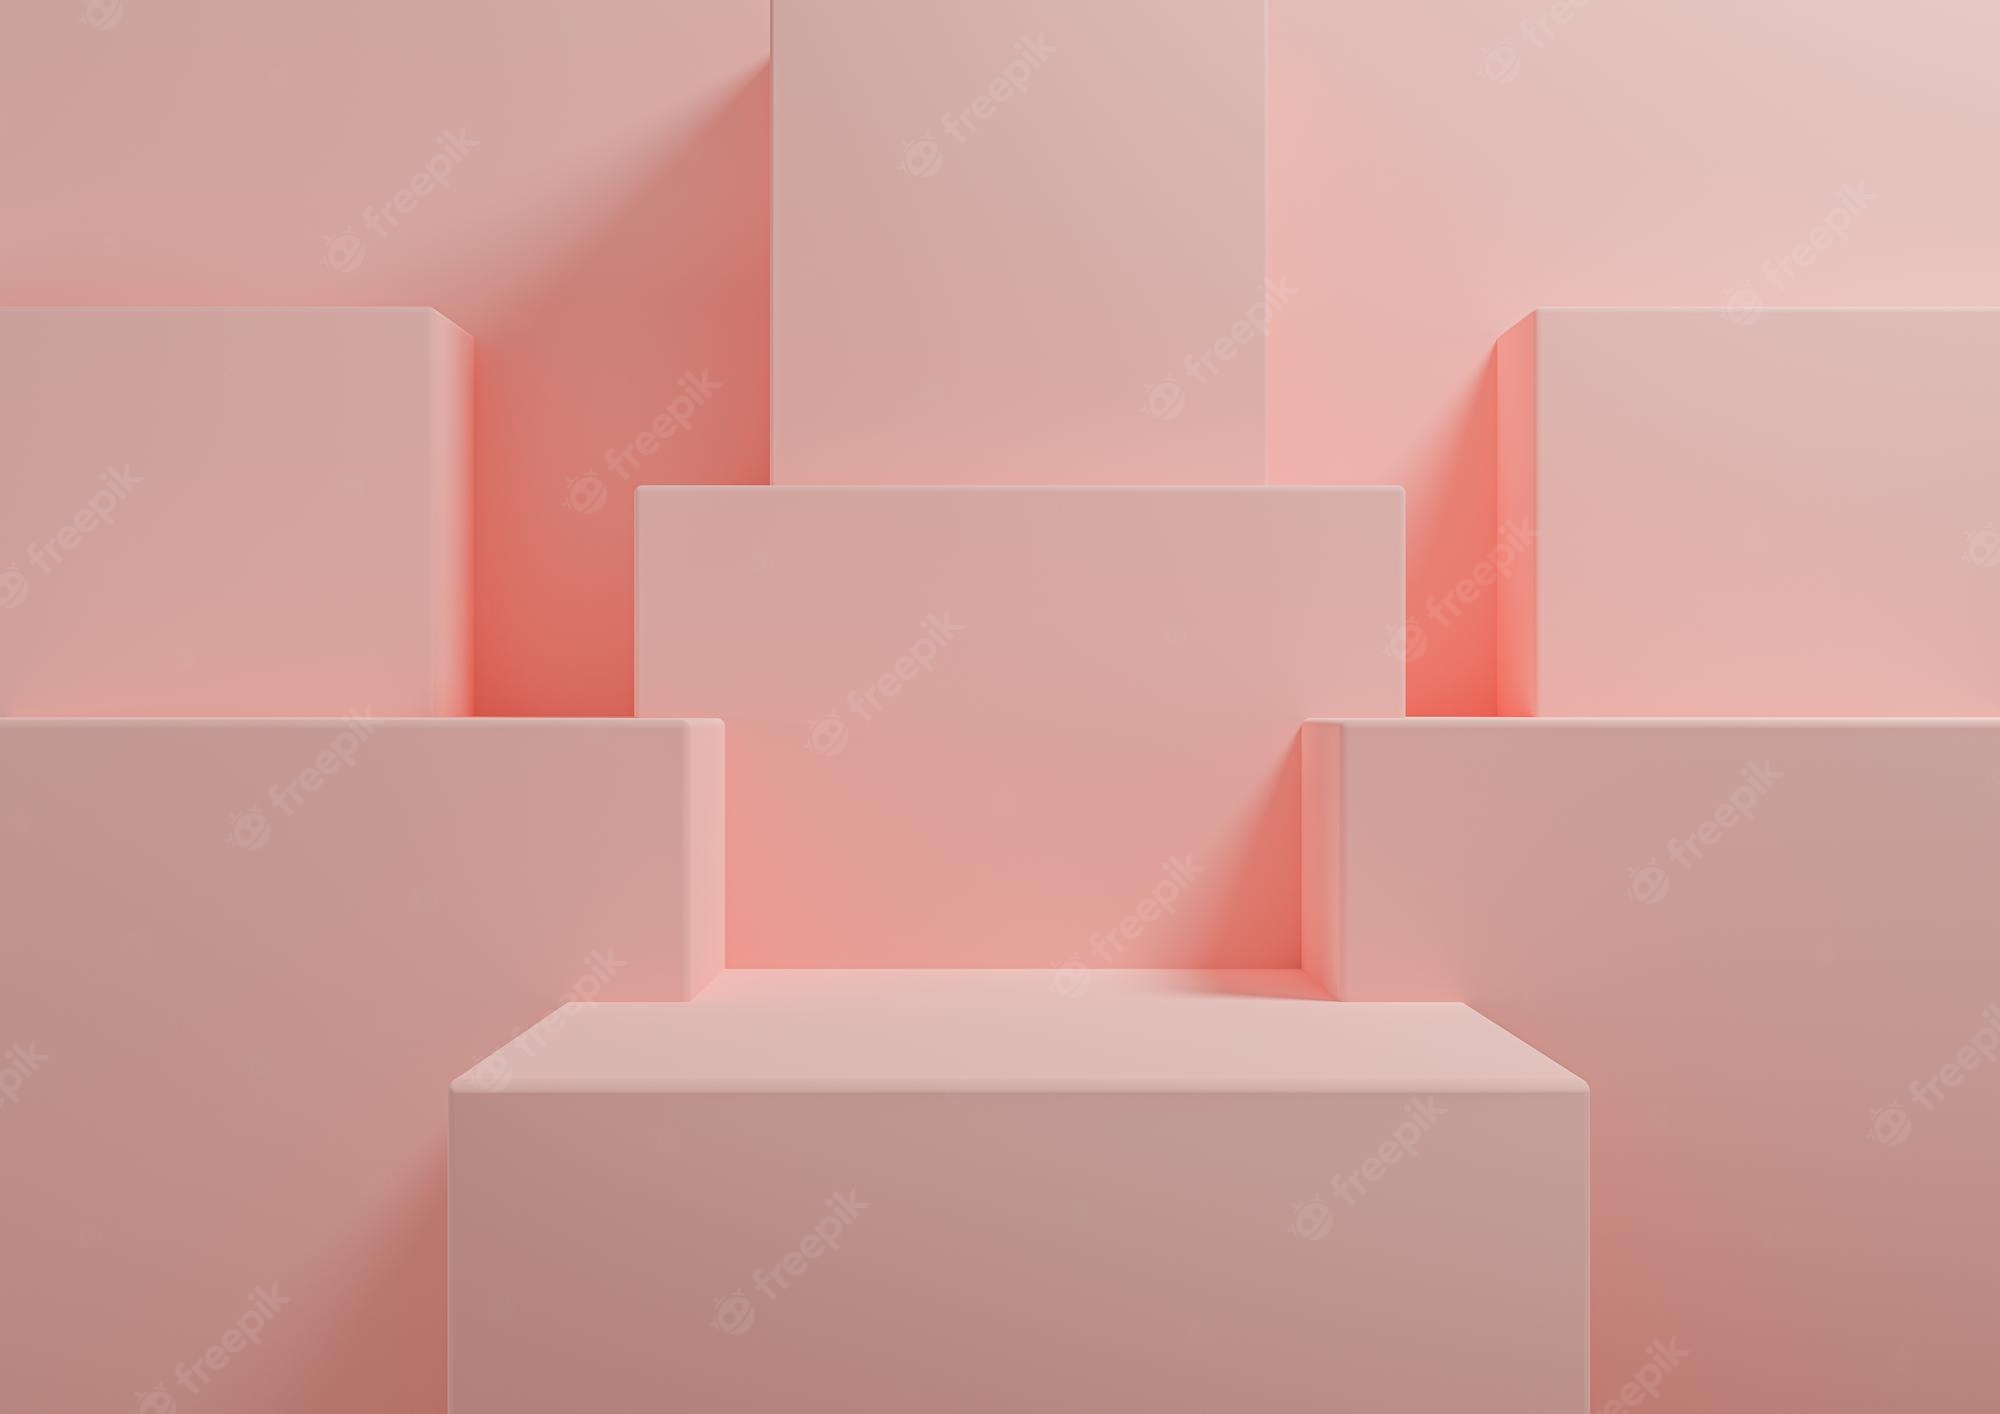 Salmon Pink Wallpaper Image. Free Vectors, & PSD